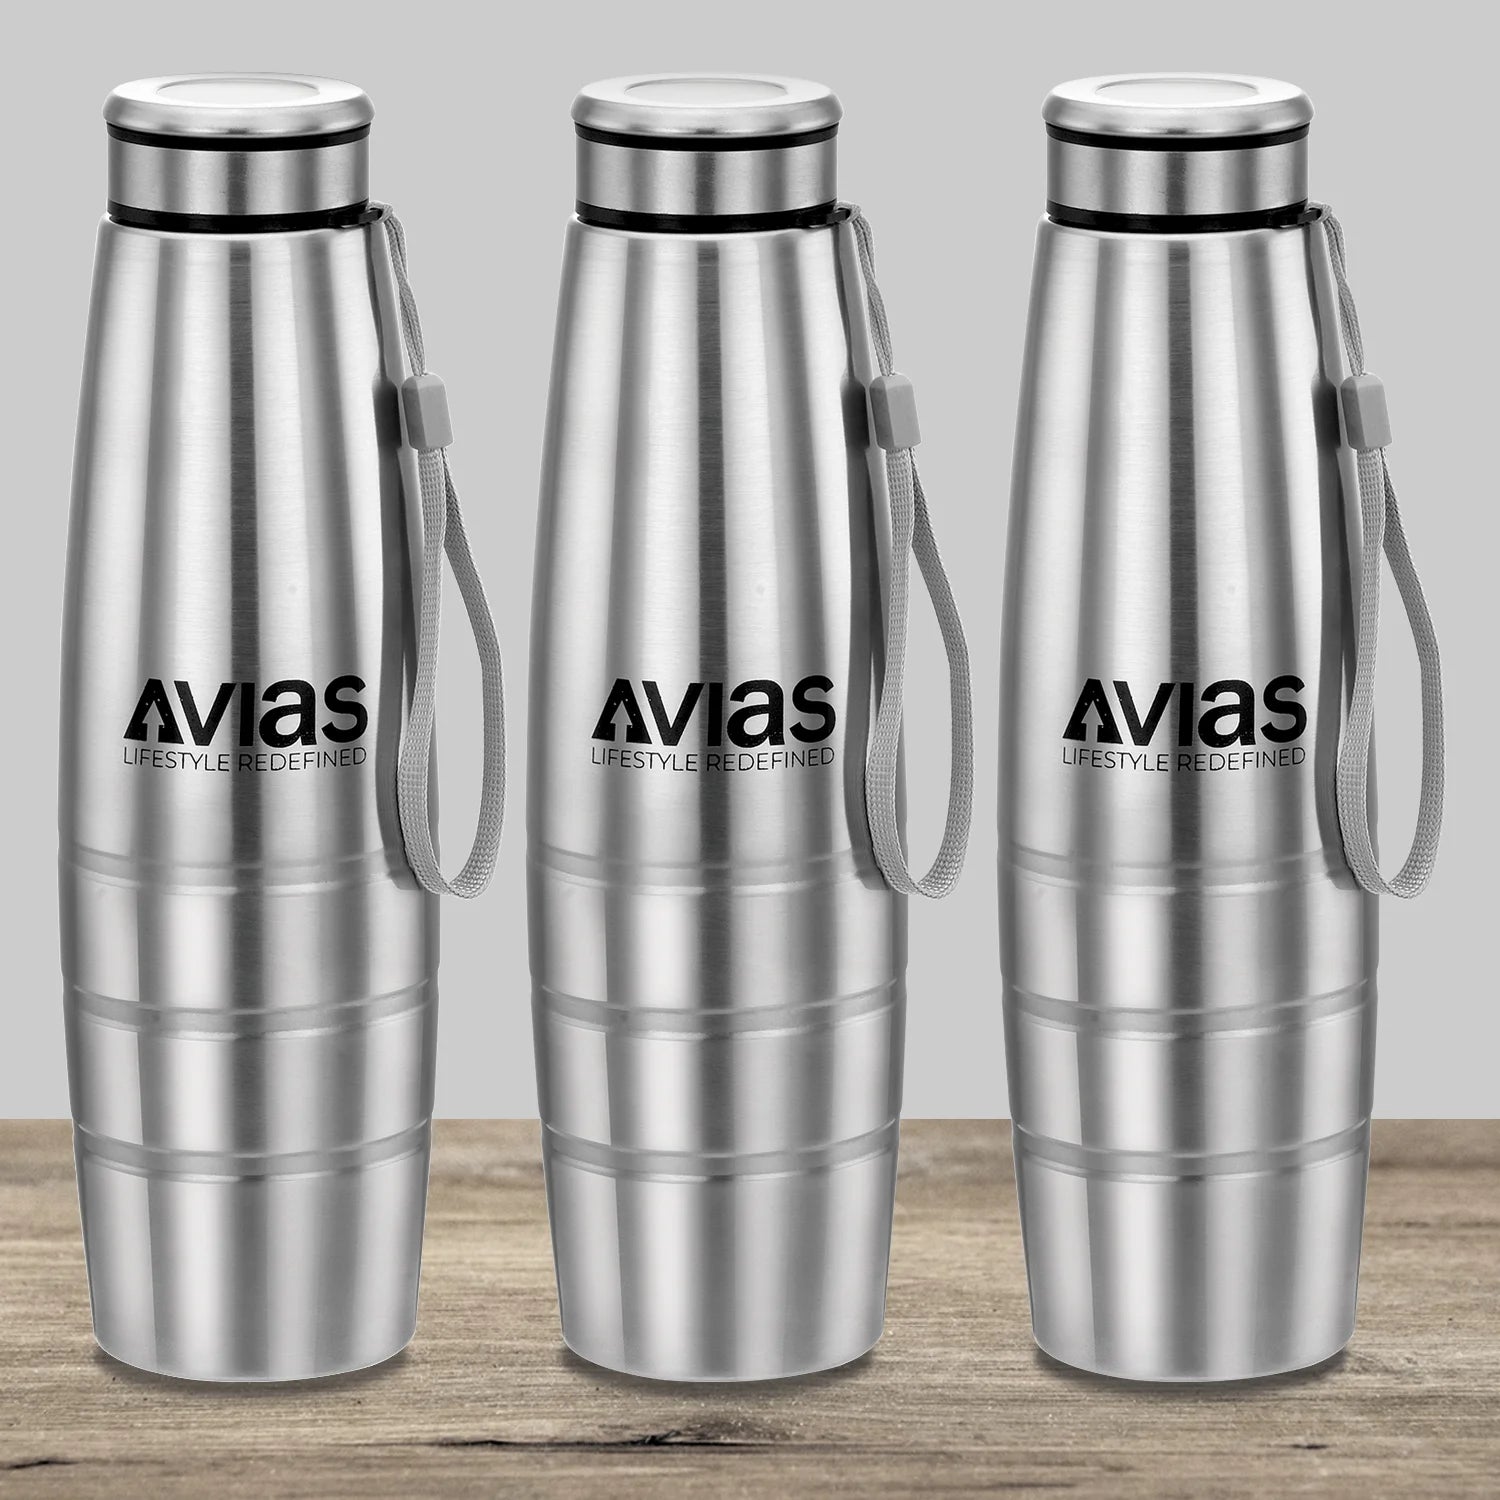 AVIAS Premia Stainless Steel Water Bottles